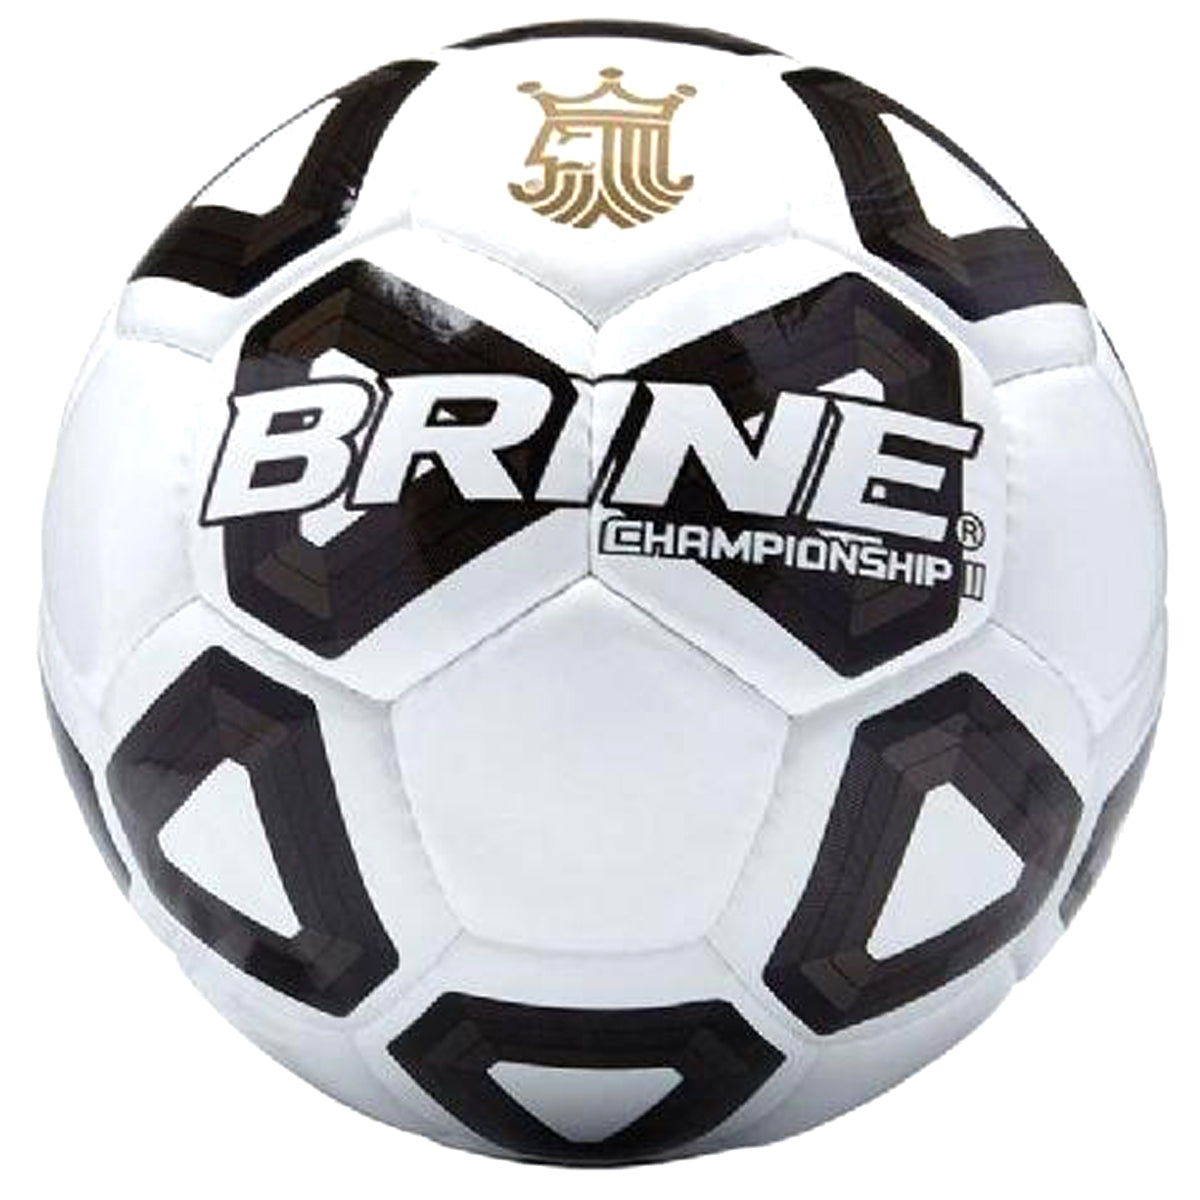 Brine Championship 2.0 Soccer Ball Size 5 - New and Improved Soccer Ball Brine 5 Black 